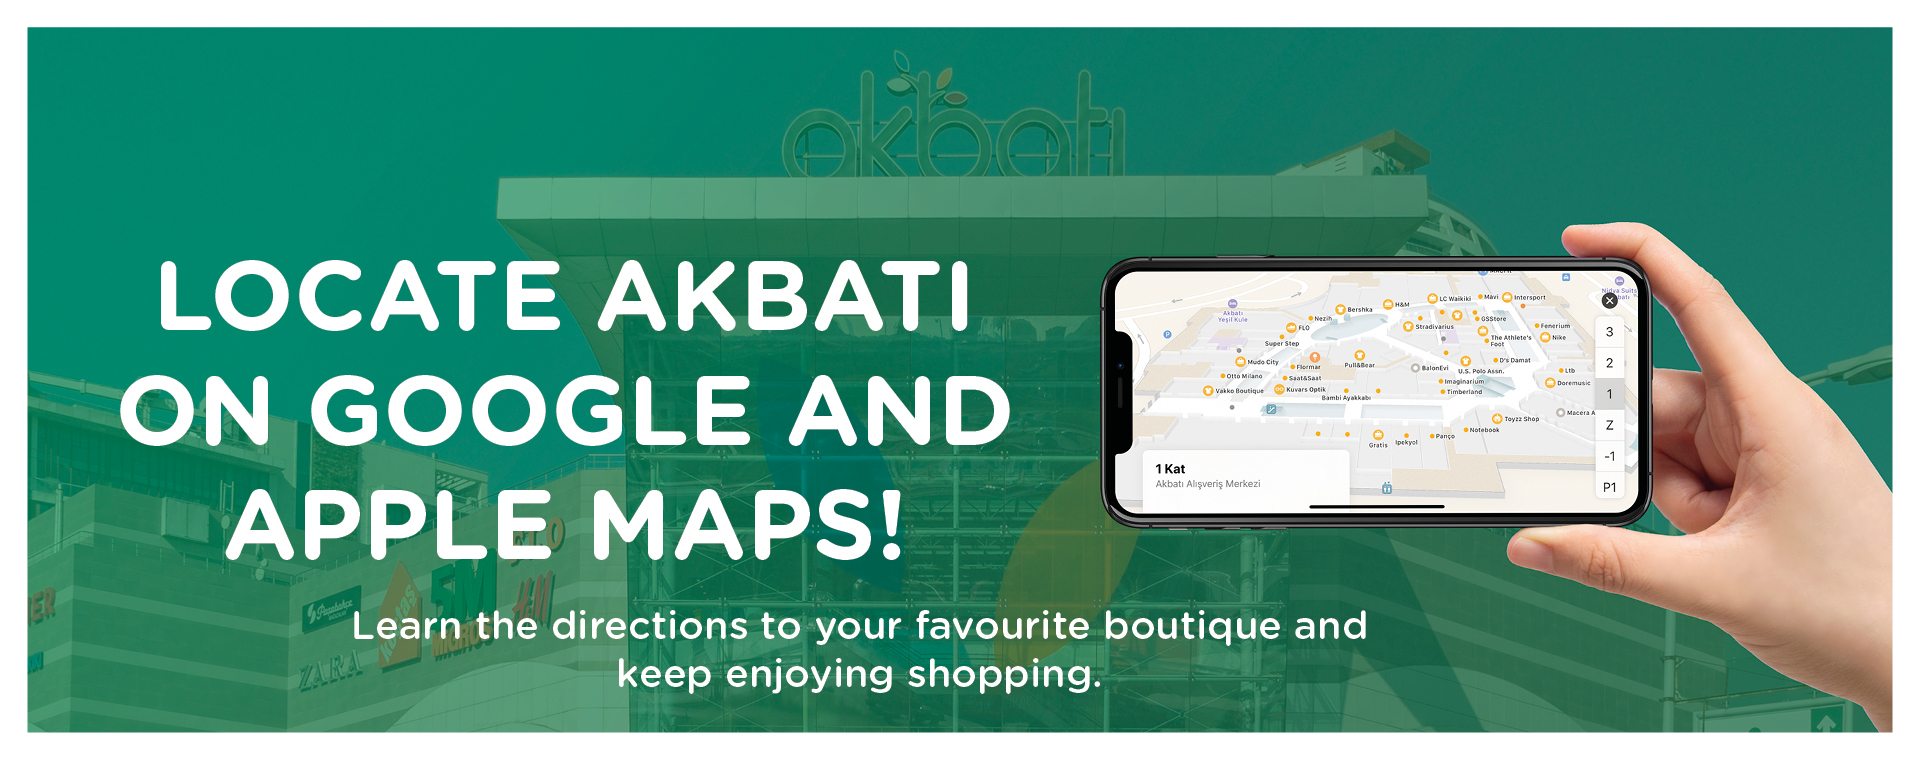 Locate Akbatı on Google and Apple Maps